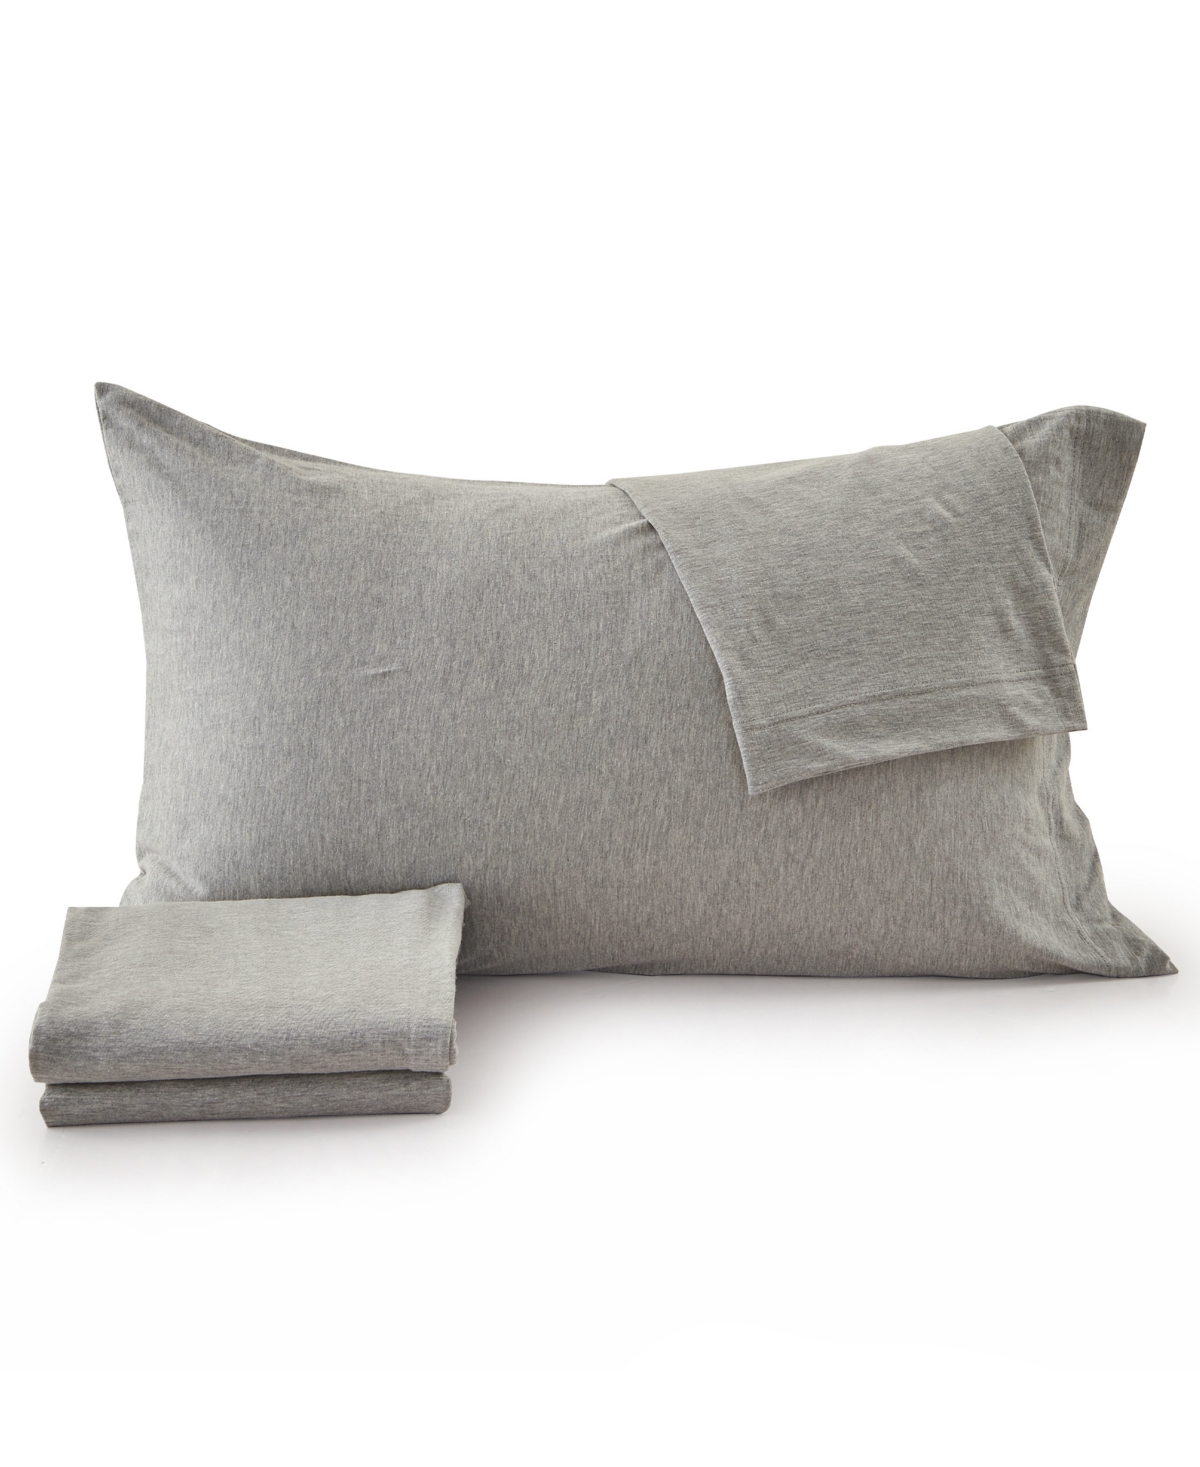 Premium Comforts Heathered Melange T-shirt Jersey Knit Cotton Blend 4 Piece Sheet Set, California King In Light Gray